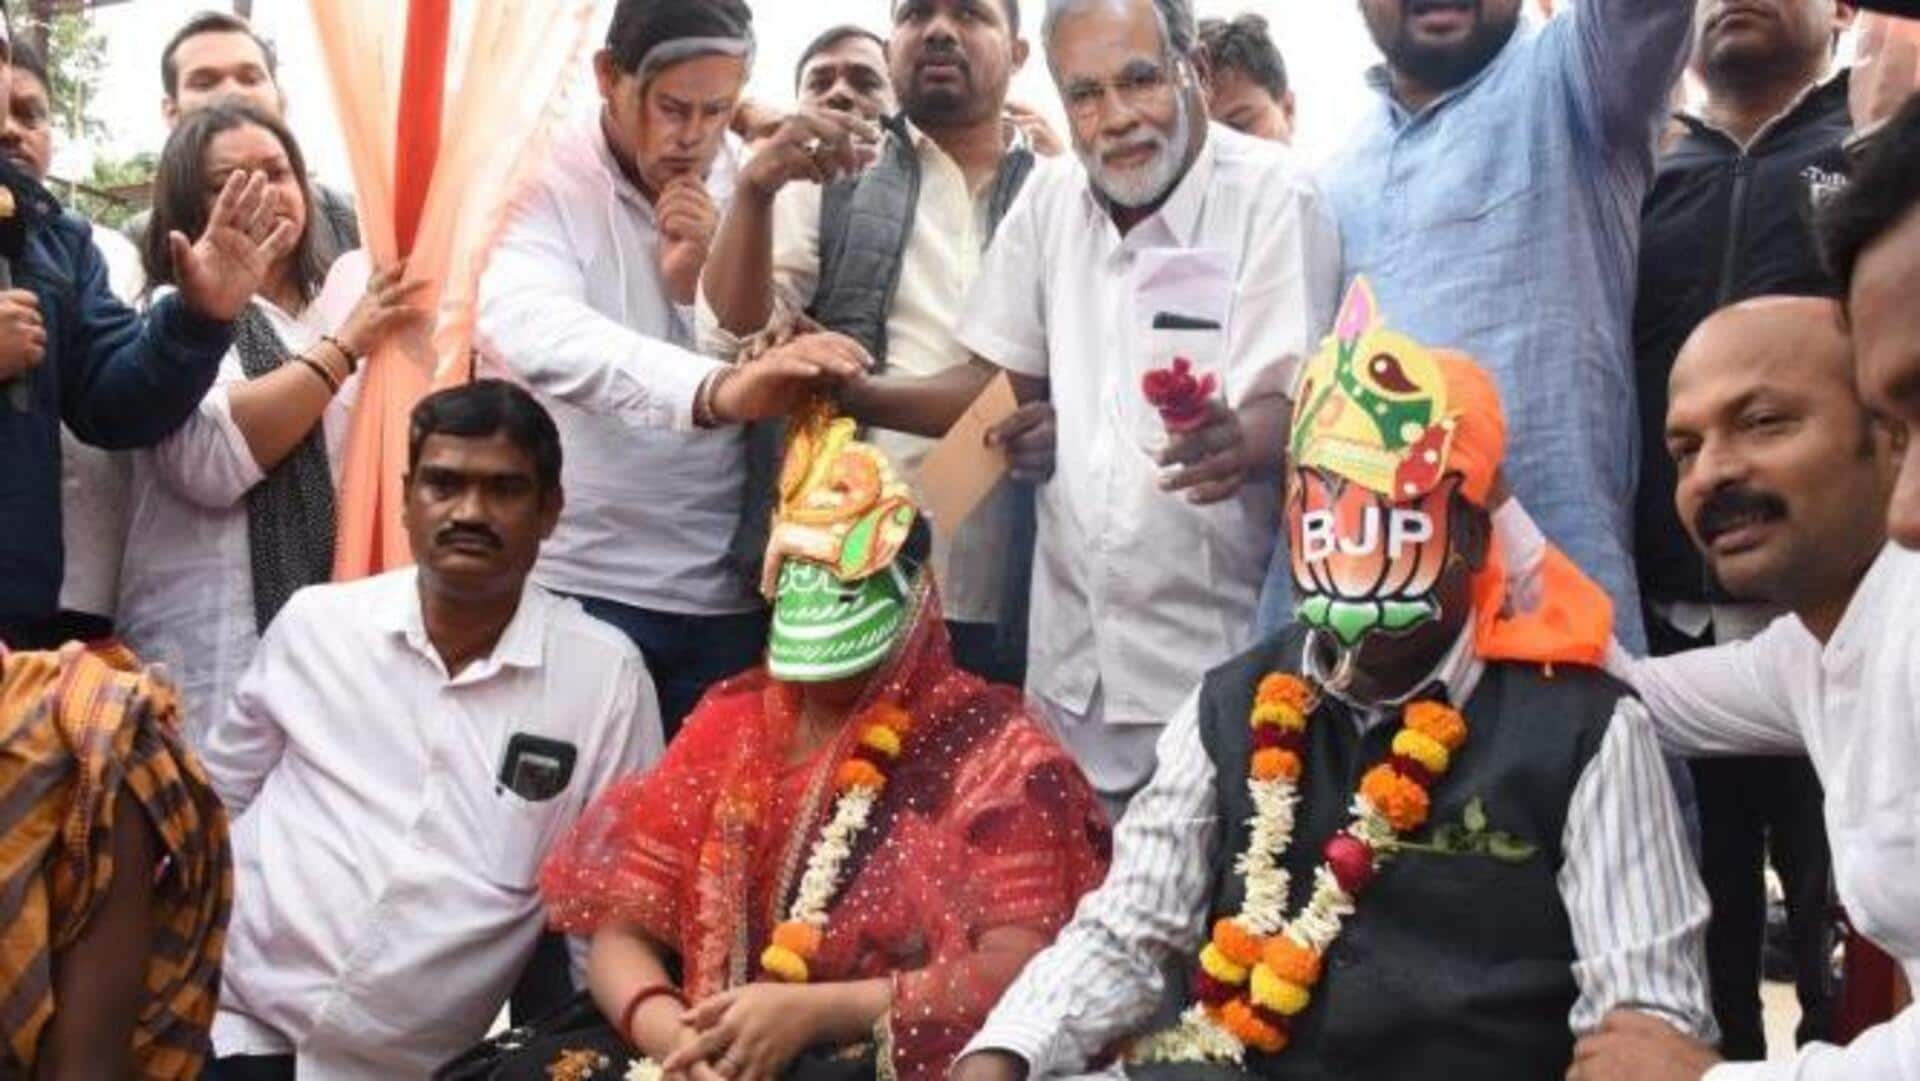 Odisha: Alleging a nexus, Congress organizes 'wedding' between BJP, BJD